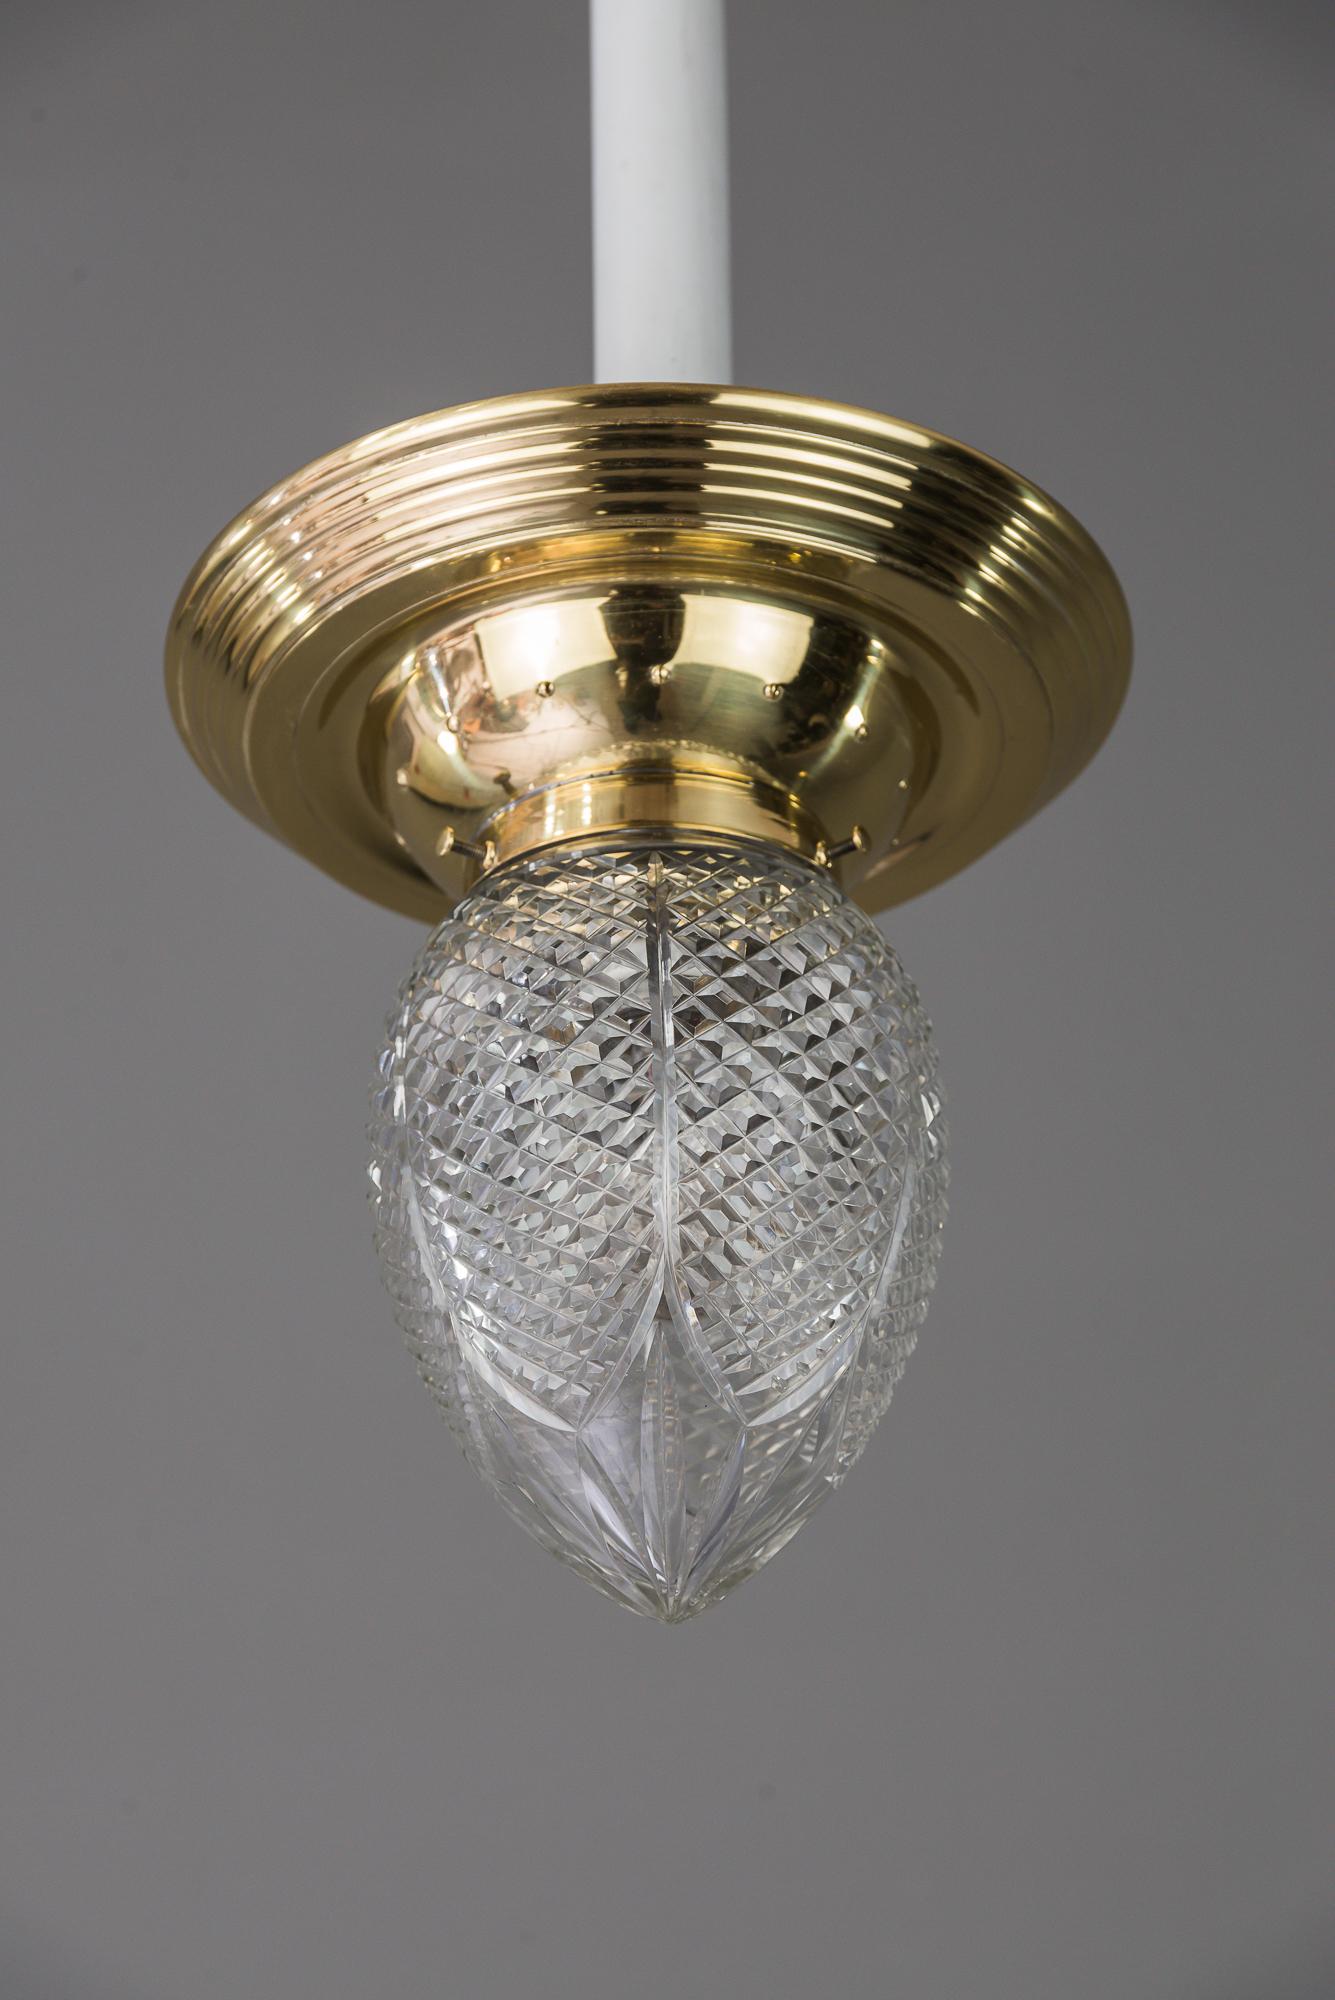 Austrian Jugendstil Ceiling Lamp with Original Cut Glass, circa 1908